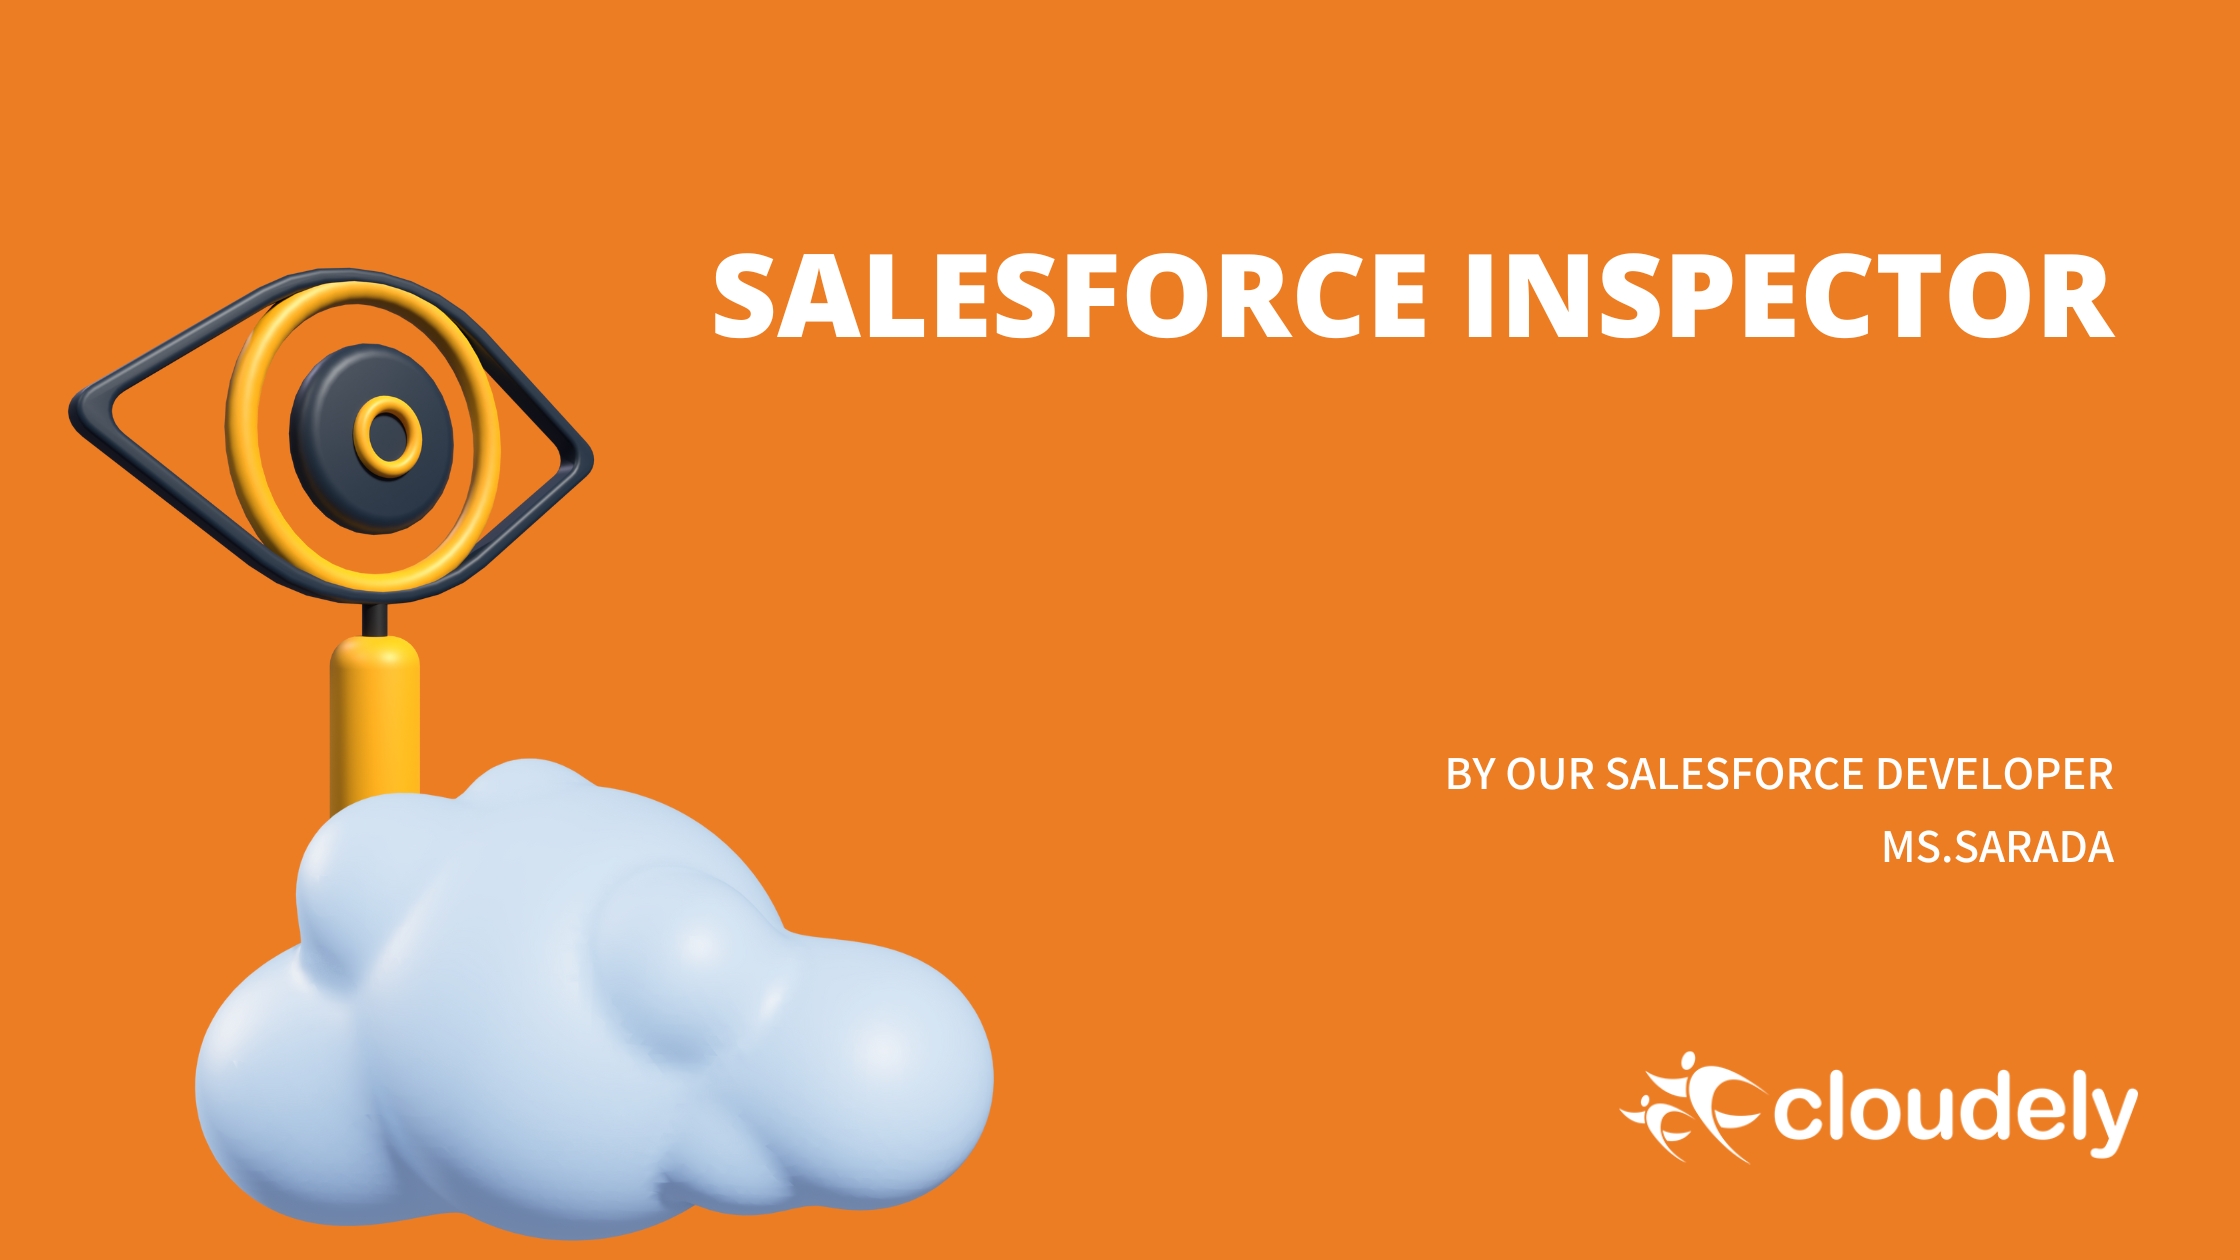 What Is a Salesforce Developer?